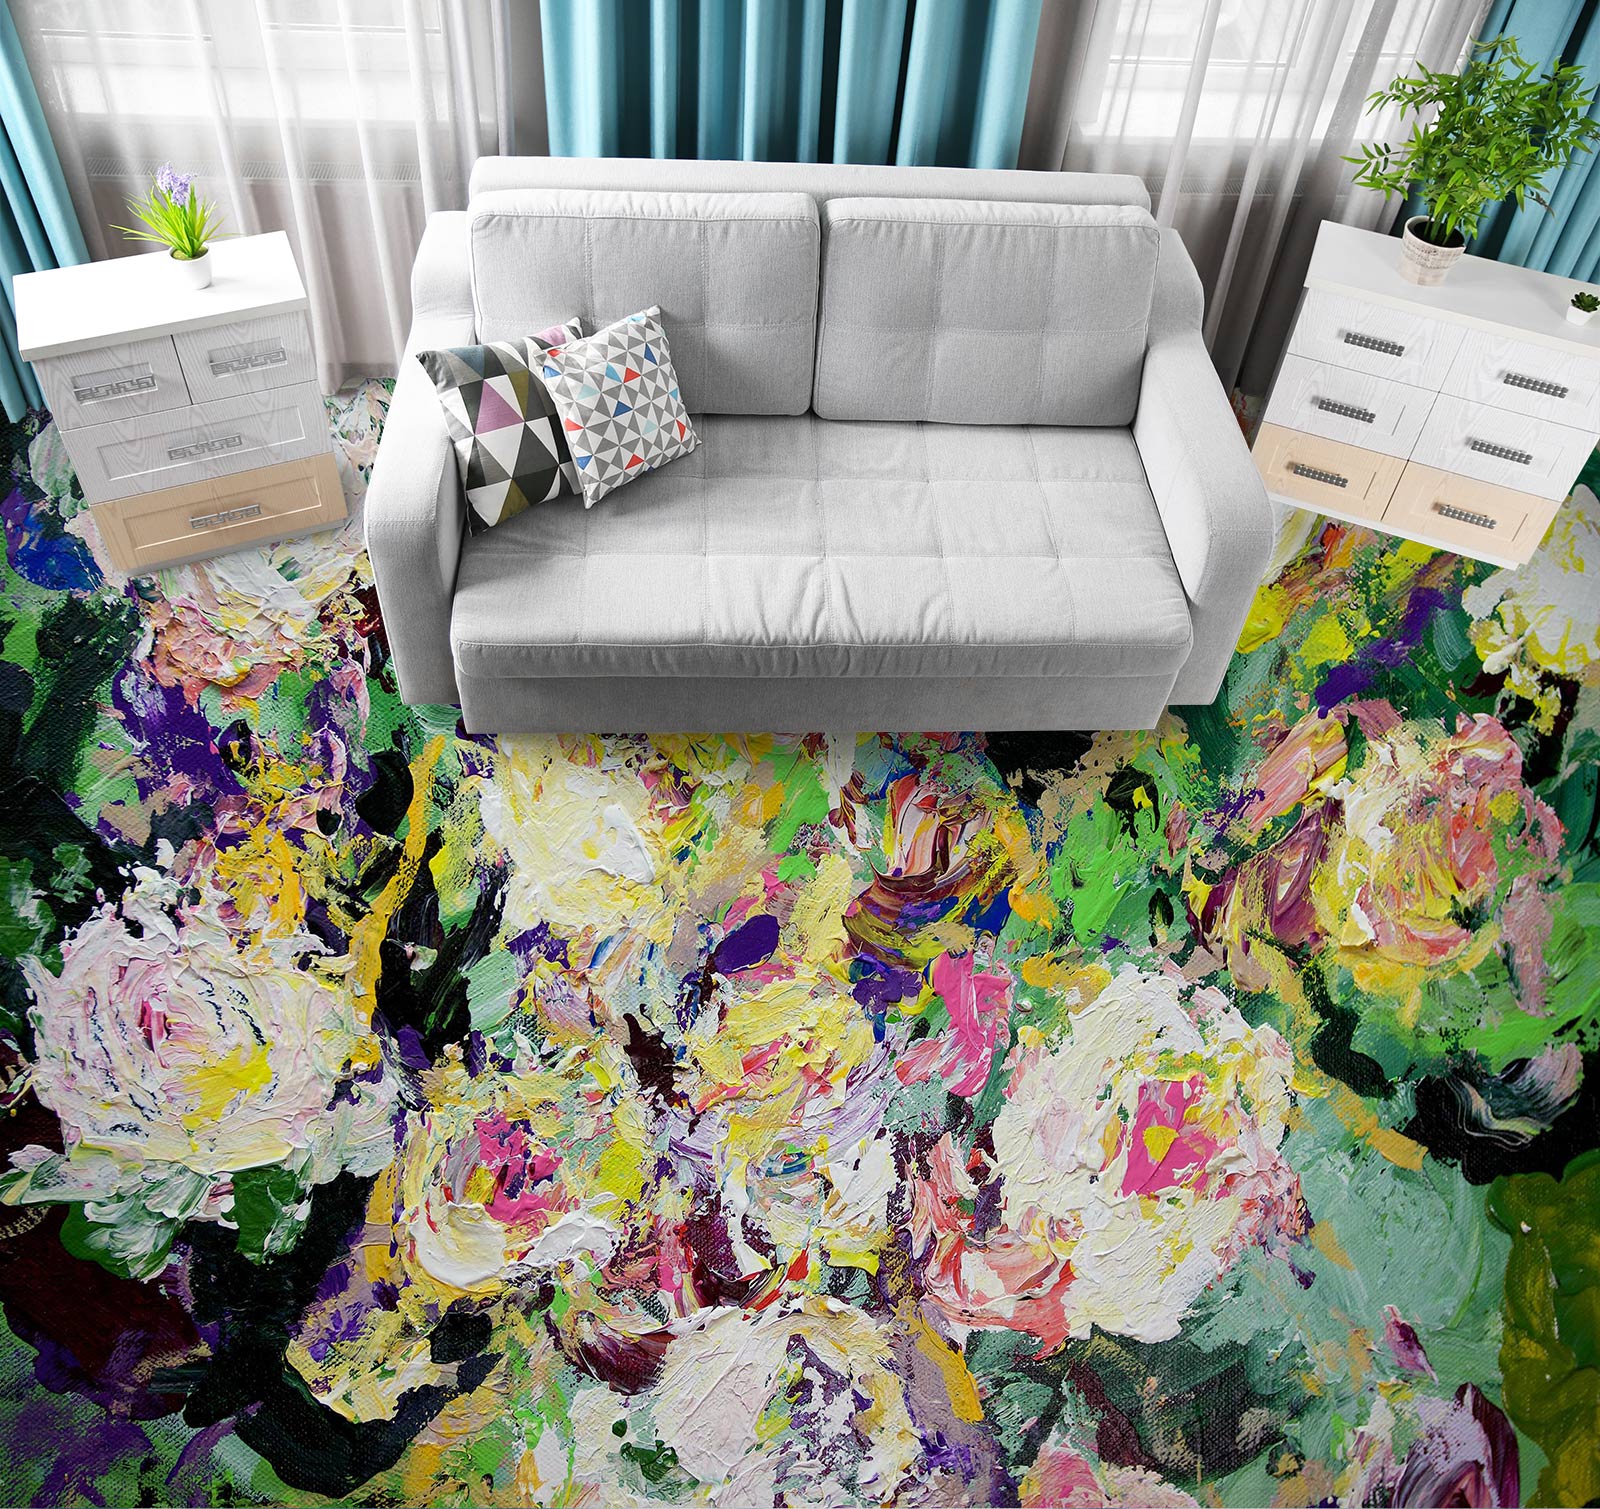 3D Flower Bush Painting 9685 Allan P. Friedlander Floor Mural  Wallpaper Murals Self-Adhesive Removable Print Epoxy